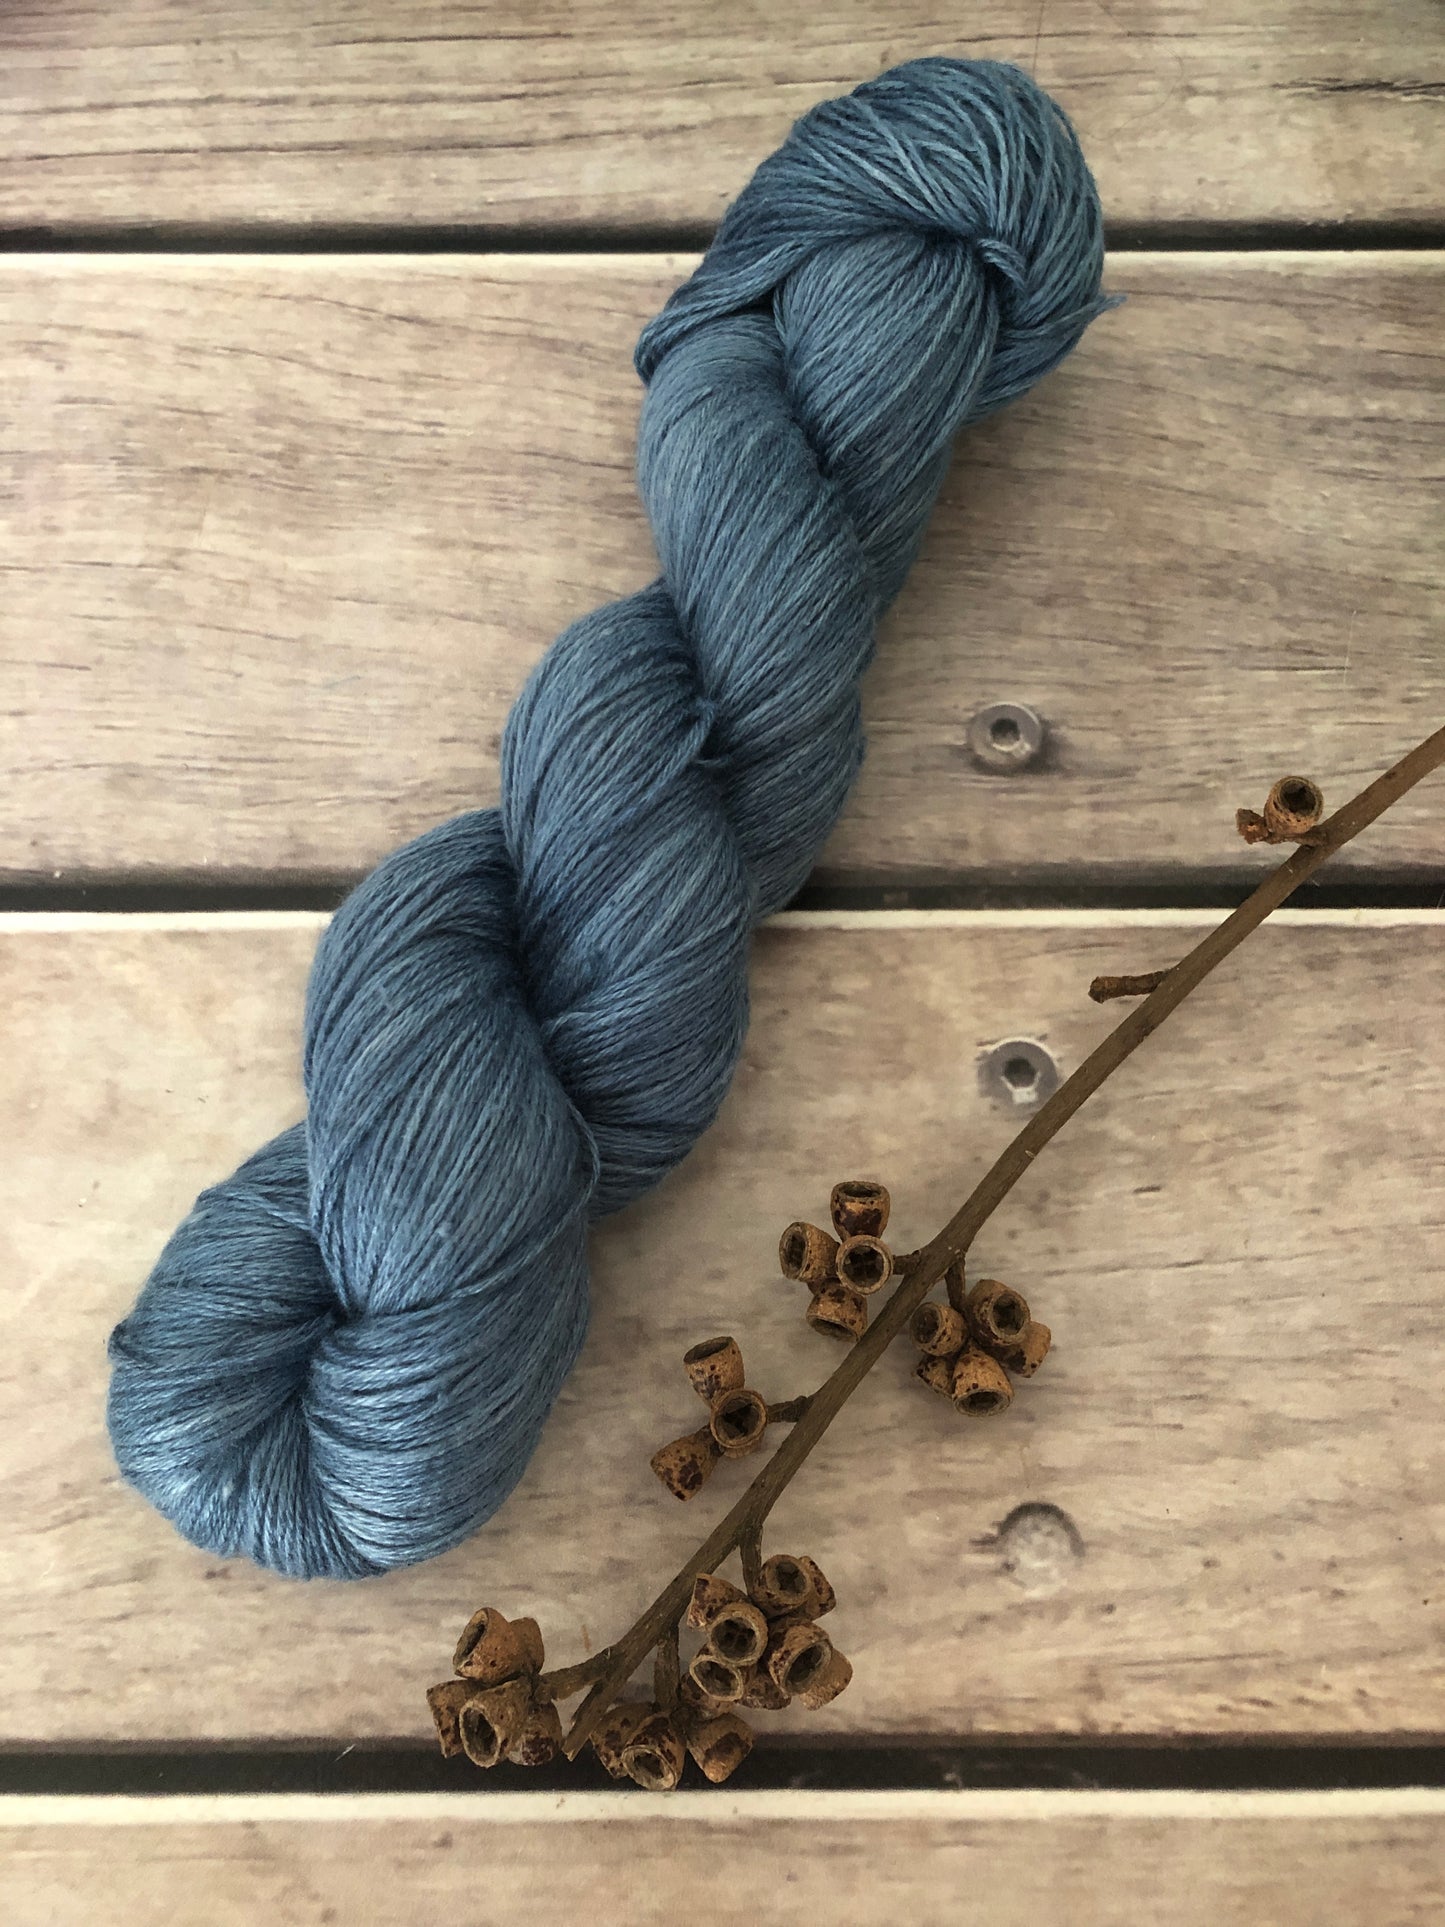 Nauriyu on Linden - 4 ply silk and linen yarn